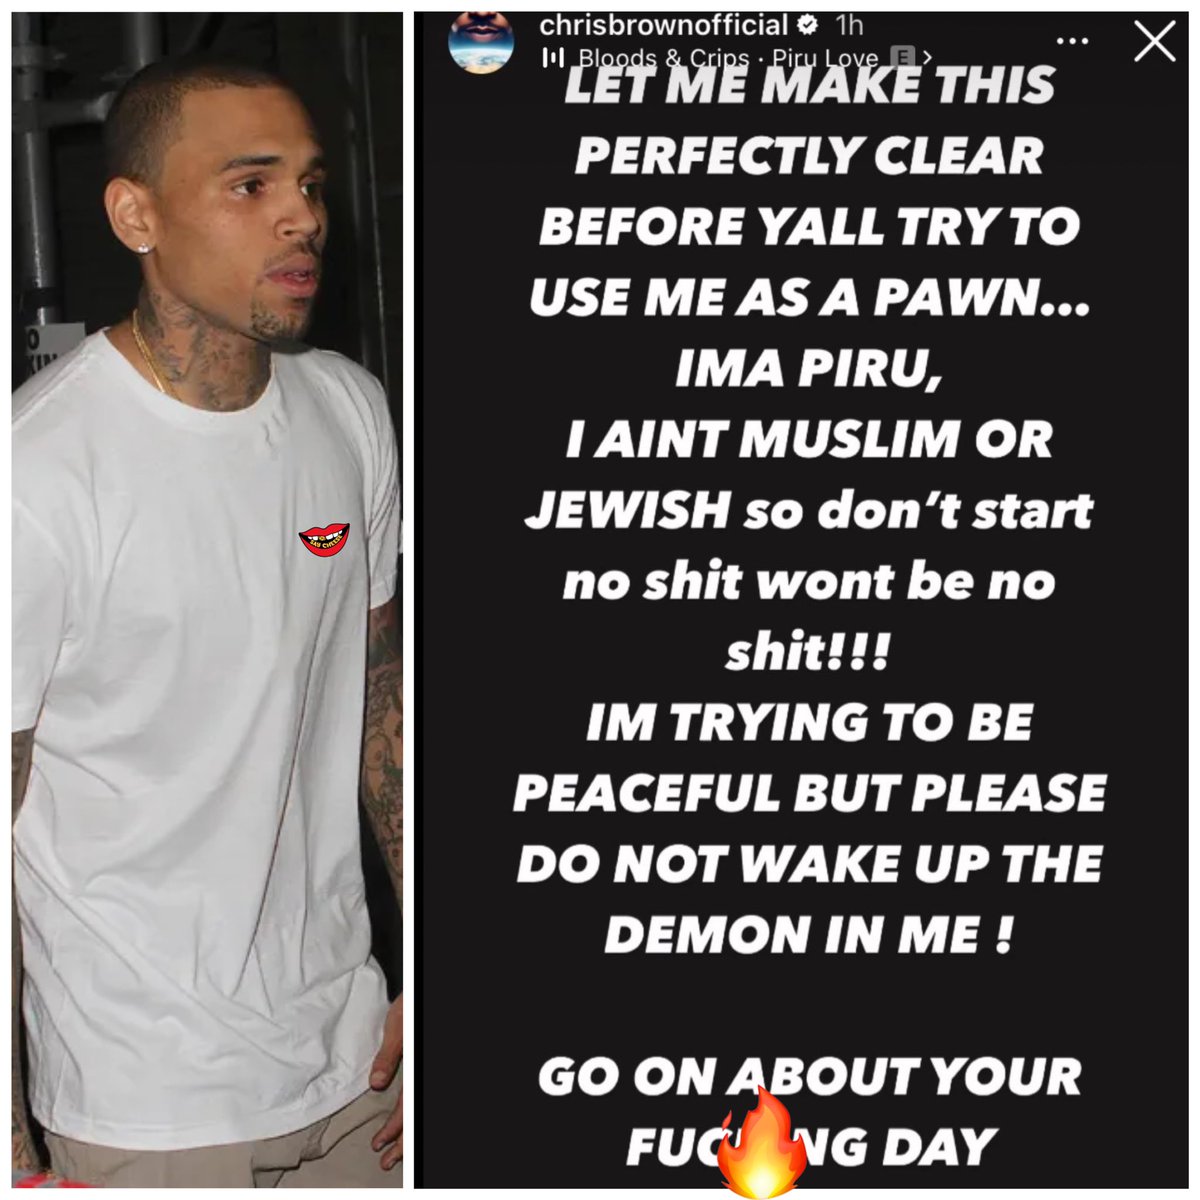 Chris Brown speaks… “ima Piru, I ain’t Muslim or Jewish”